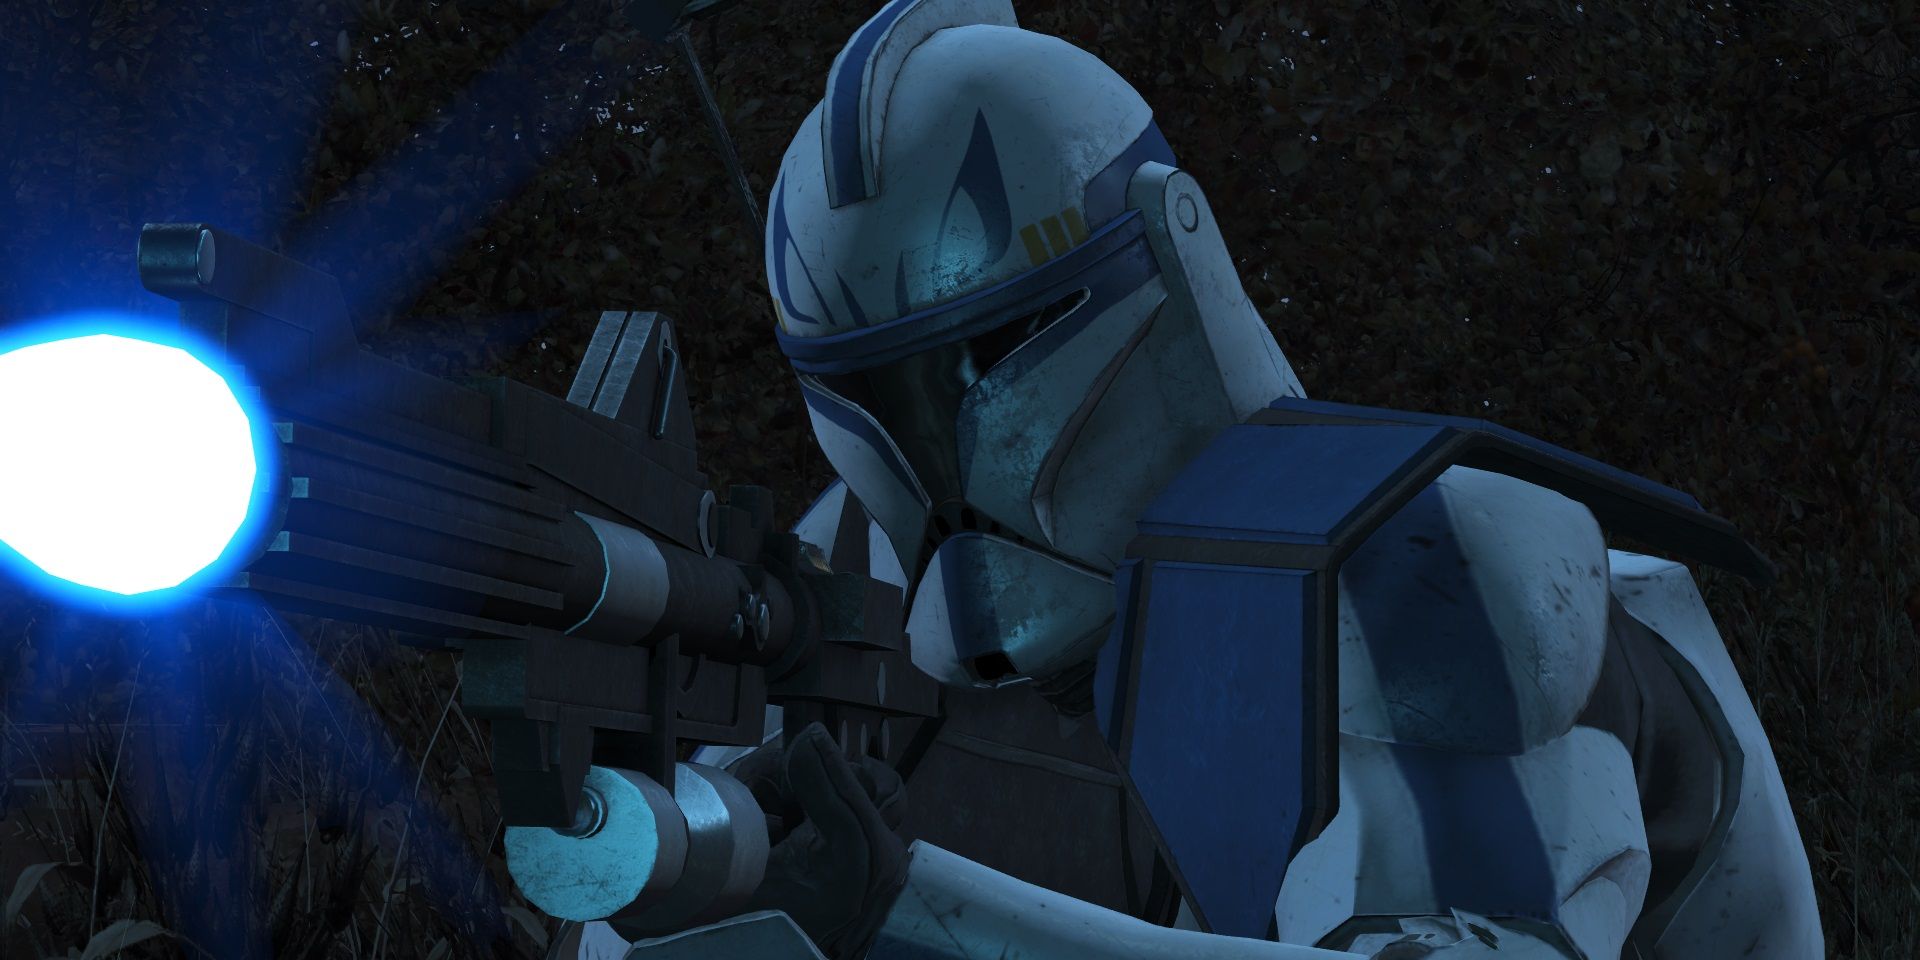 Captain Rex aiming his gun in Star Wars: The Clone Wars